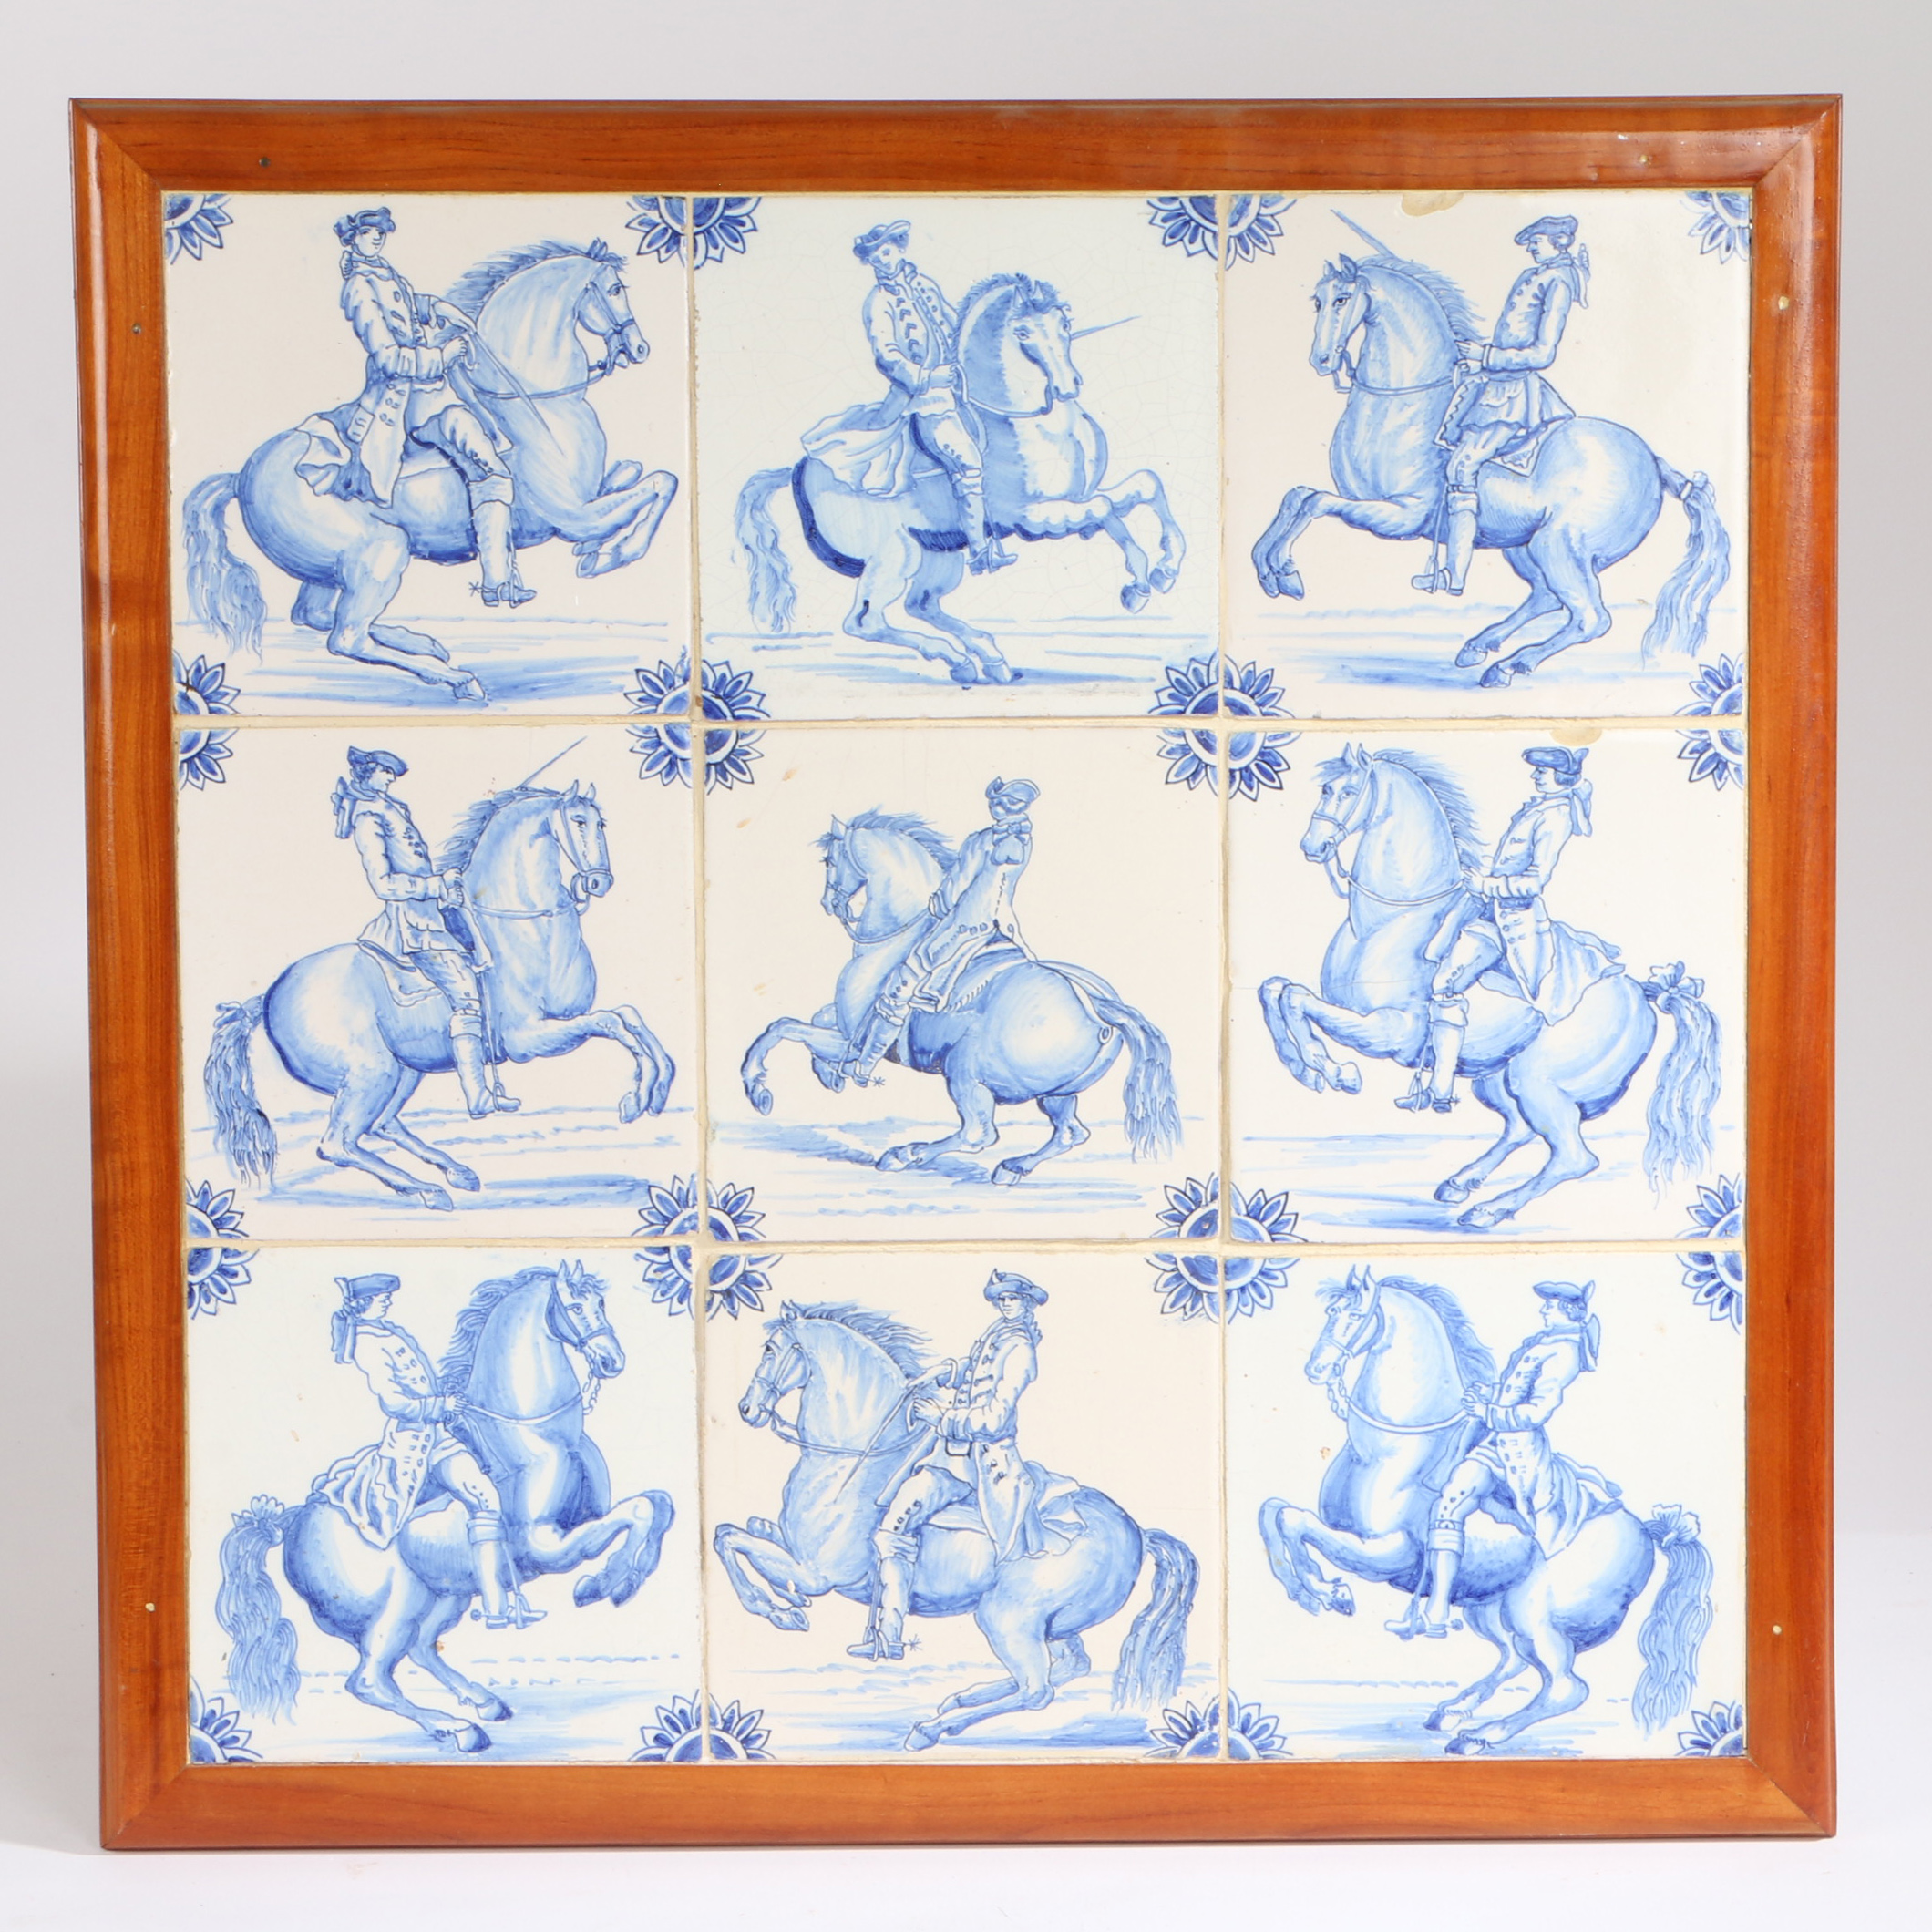 Nine 18th Century delft tiles depicting figures on horseback, housed in a pine frame, 51.5cm wide,